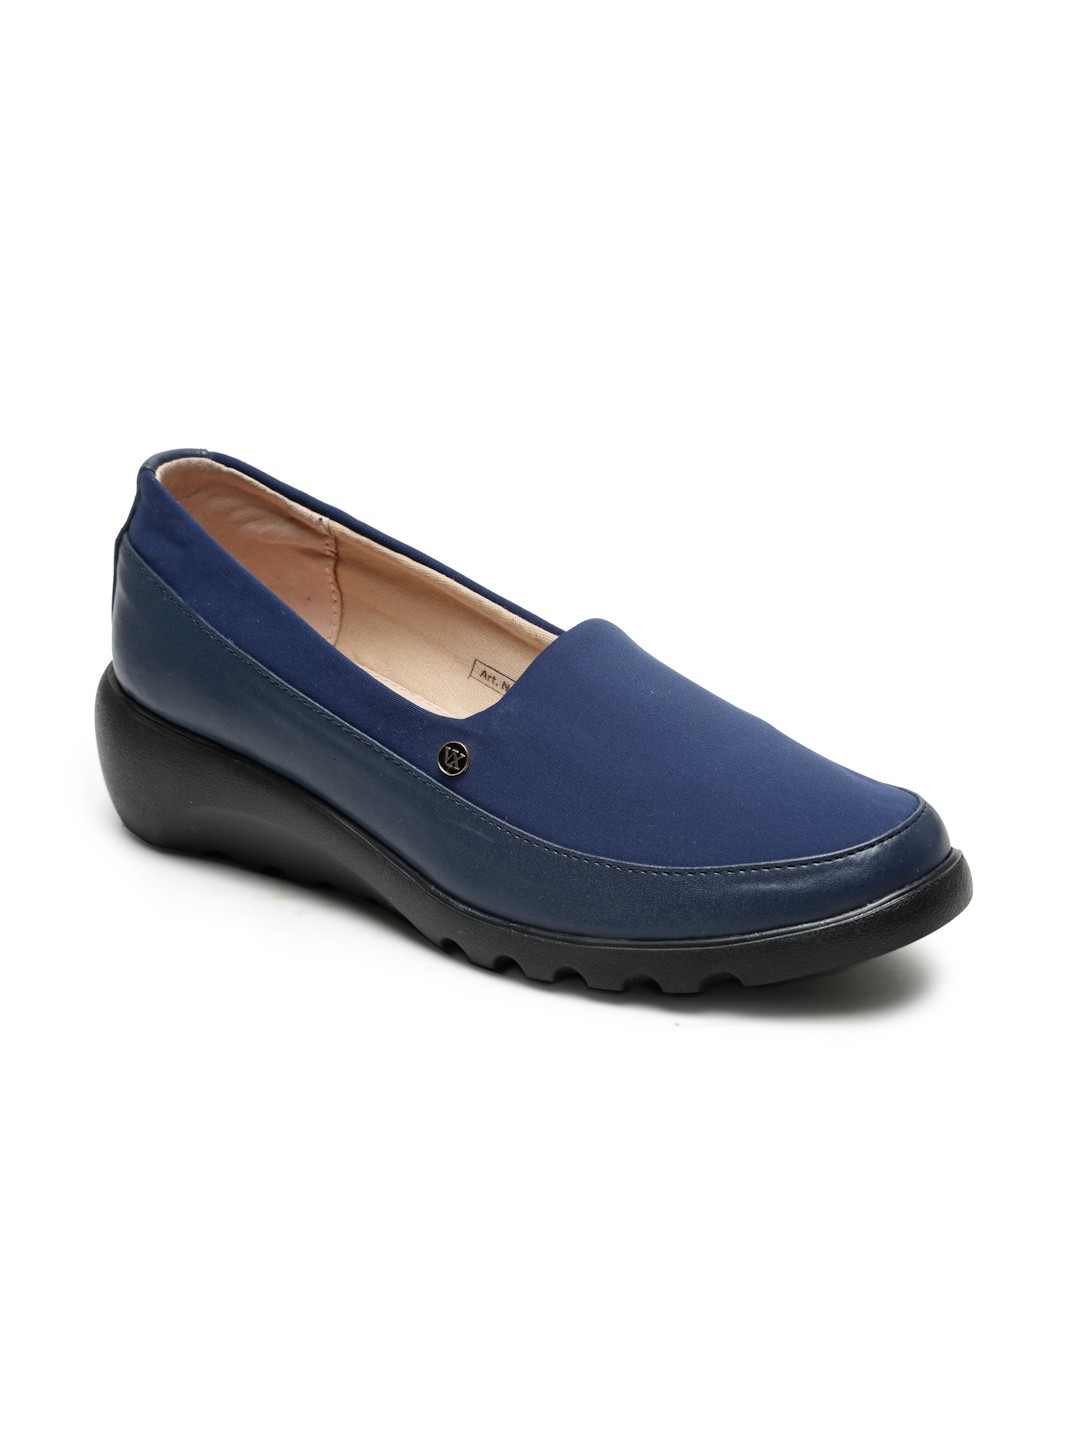 Buy Von Wellx Germany Comfort Women's Blue Casual Shoes Elsa Online in Dubai